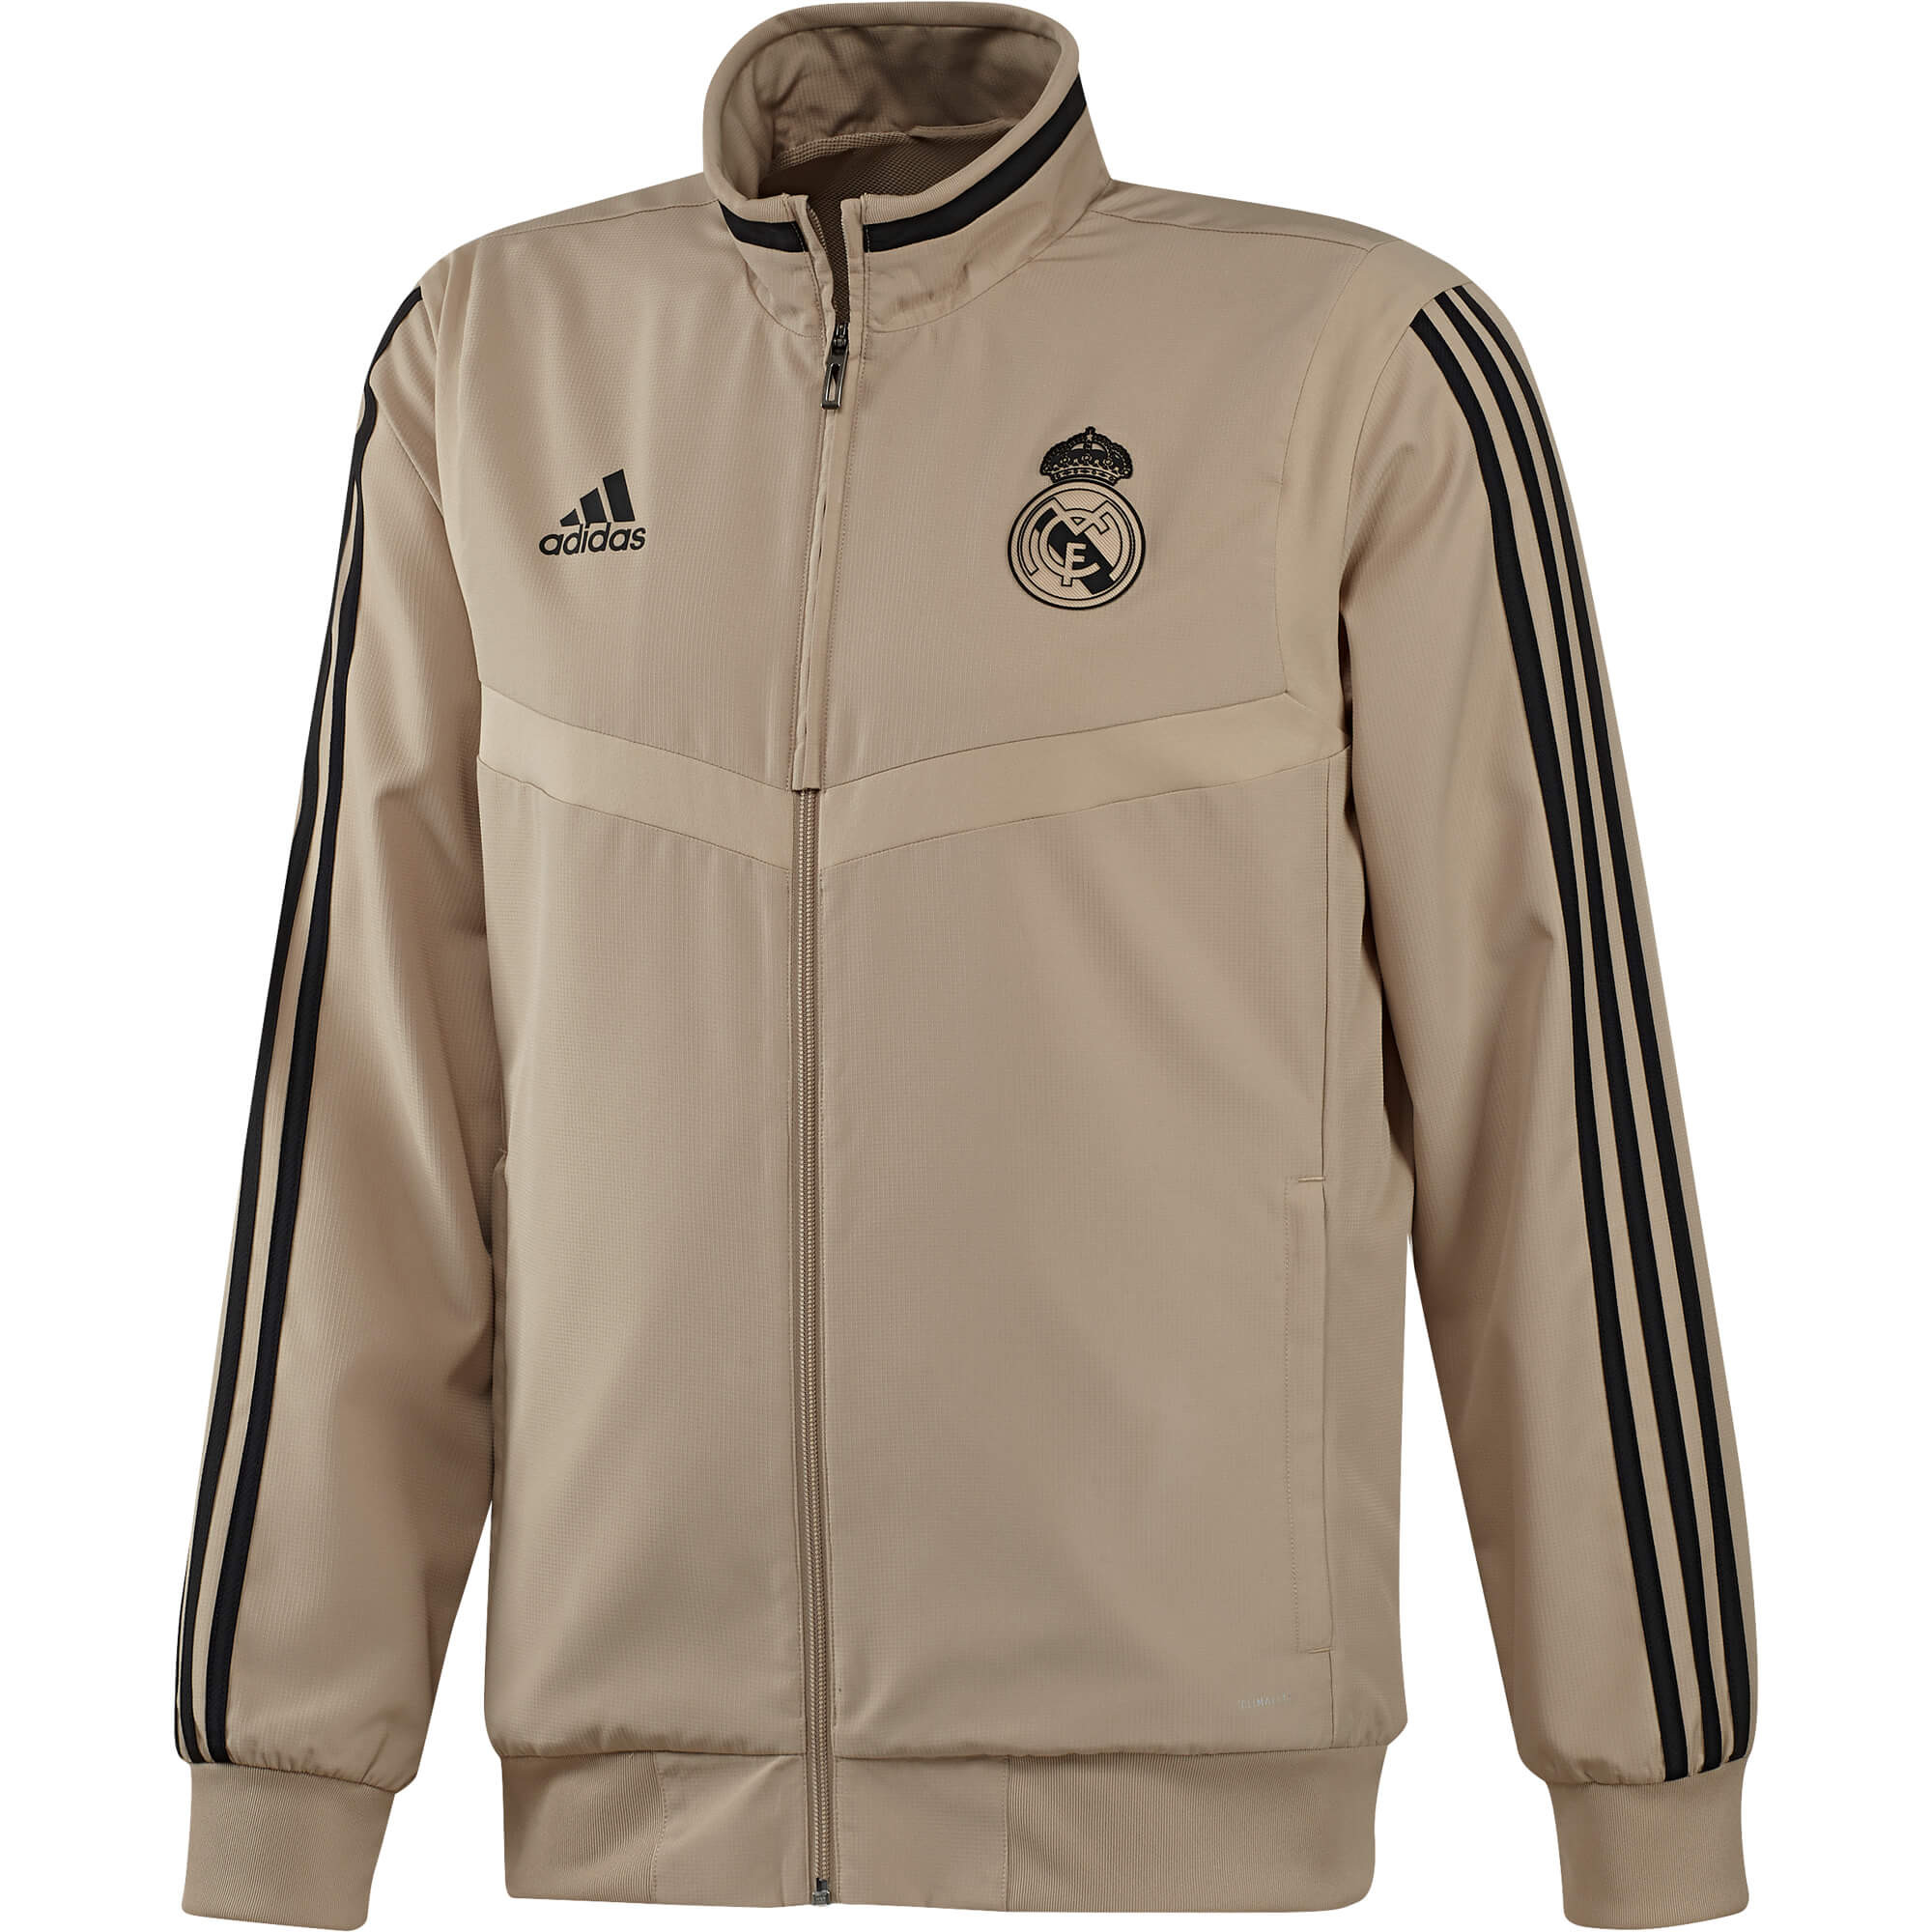 Адидас реал. Adidas real Madrid Jacket. Adidas real pre Jacket. Куртка adidas real Madrid Bomber ha2530. Ветровка адидас real Madrid pre.